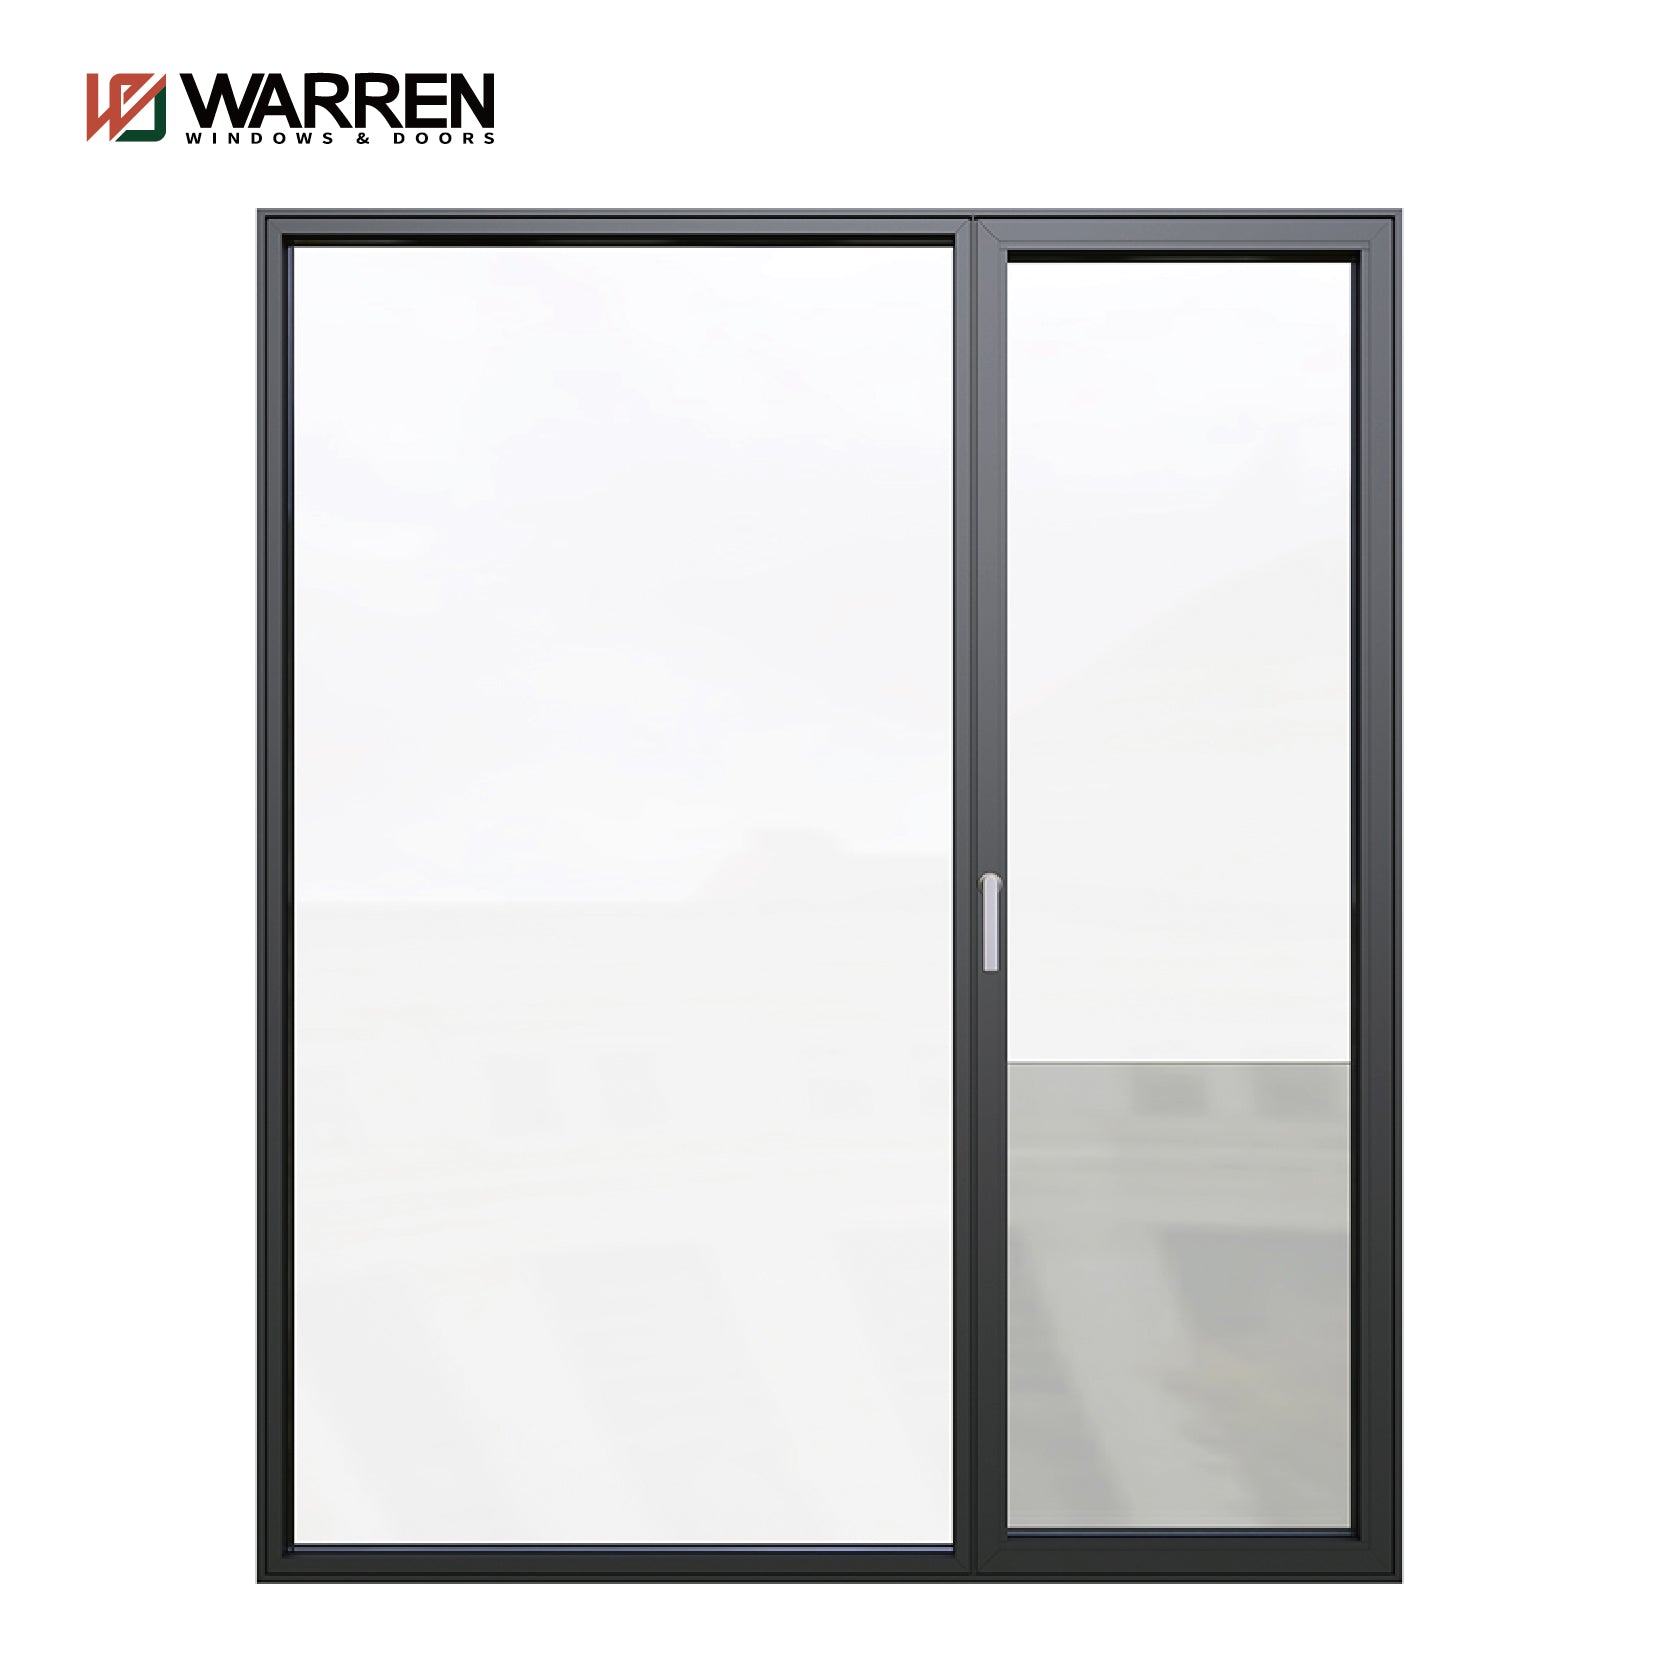 Warren 32x72 window American Market Standard Customizable Design insulated low-E glass casement window